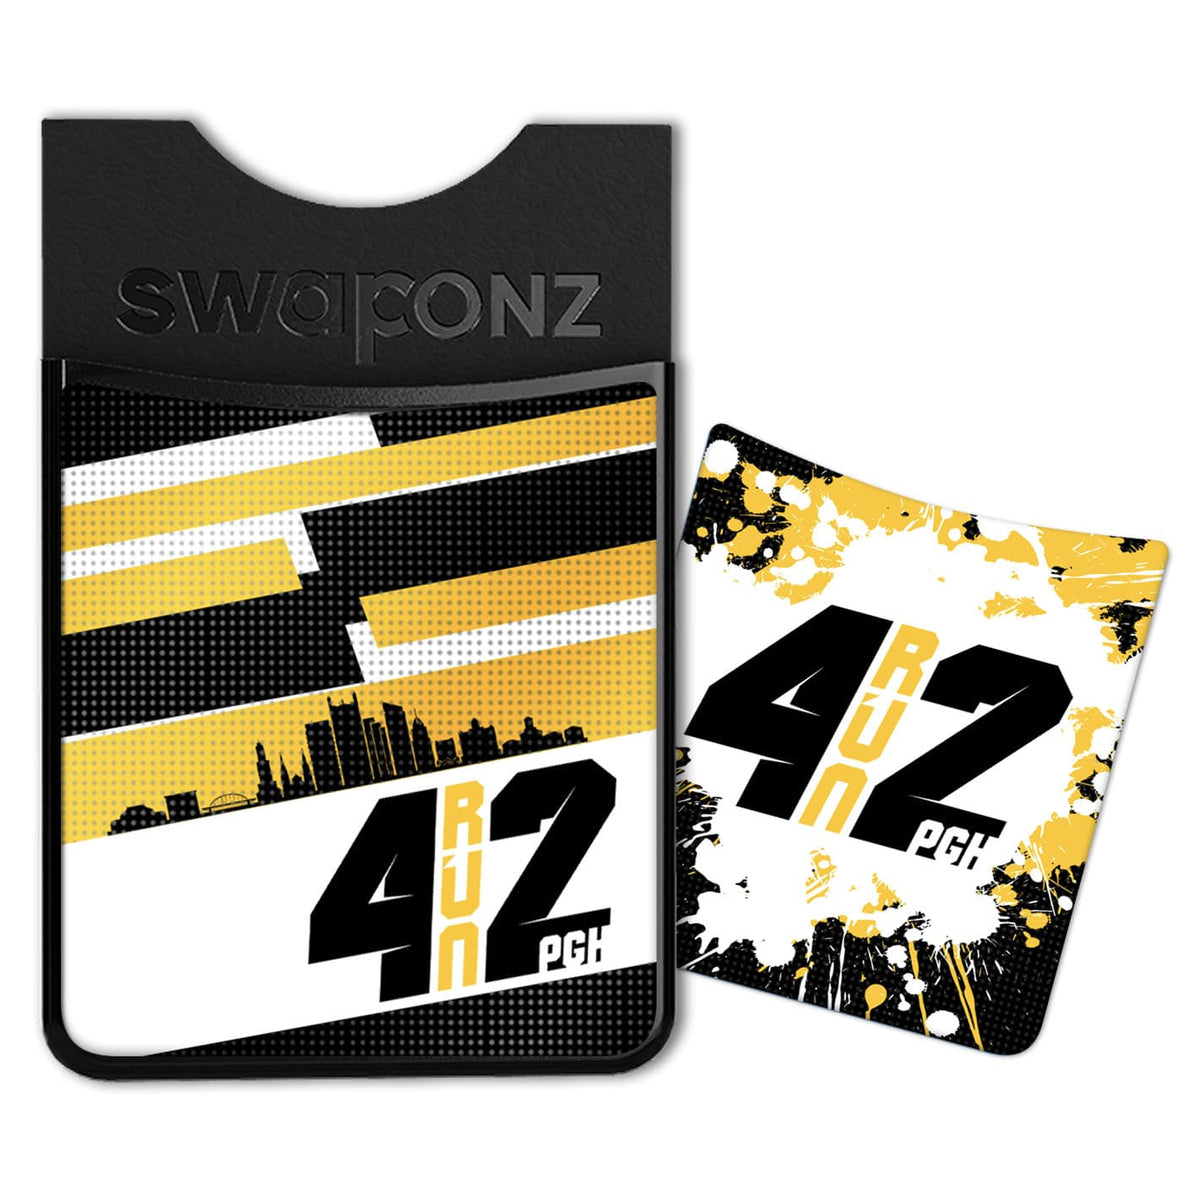 Phone Wallet Set - Pittsburgh Marathon 2